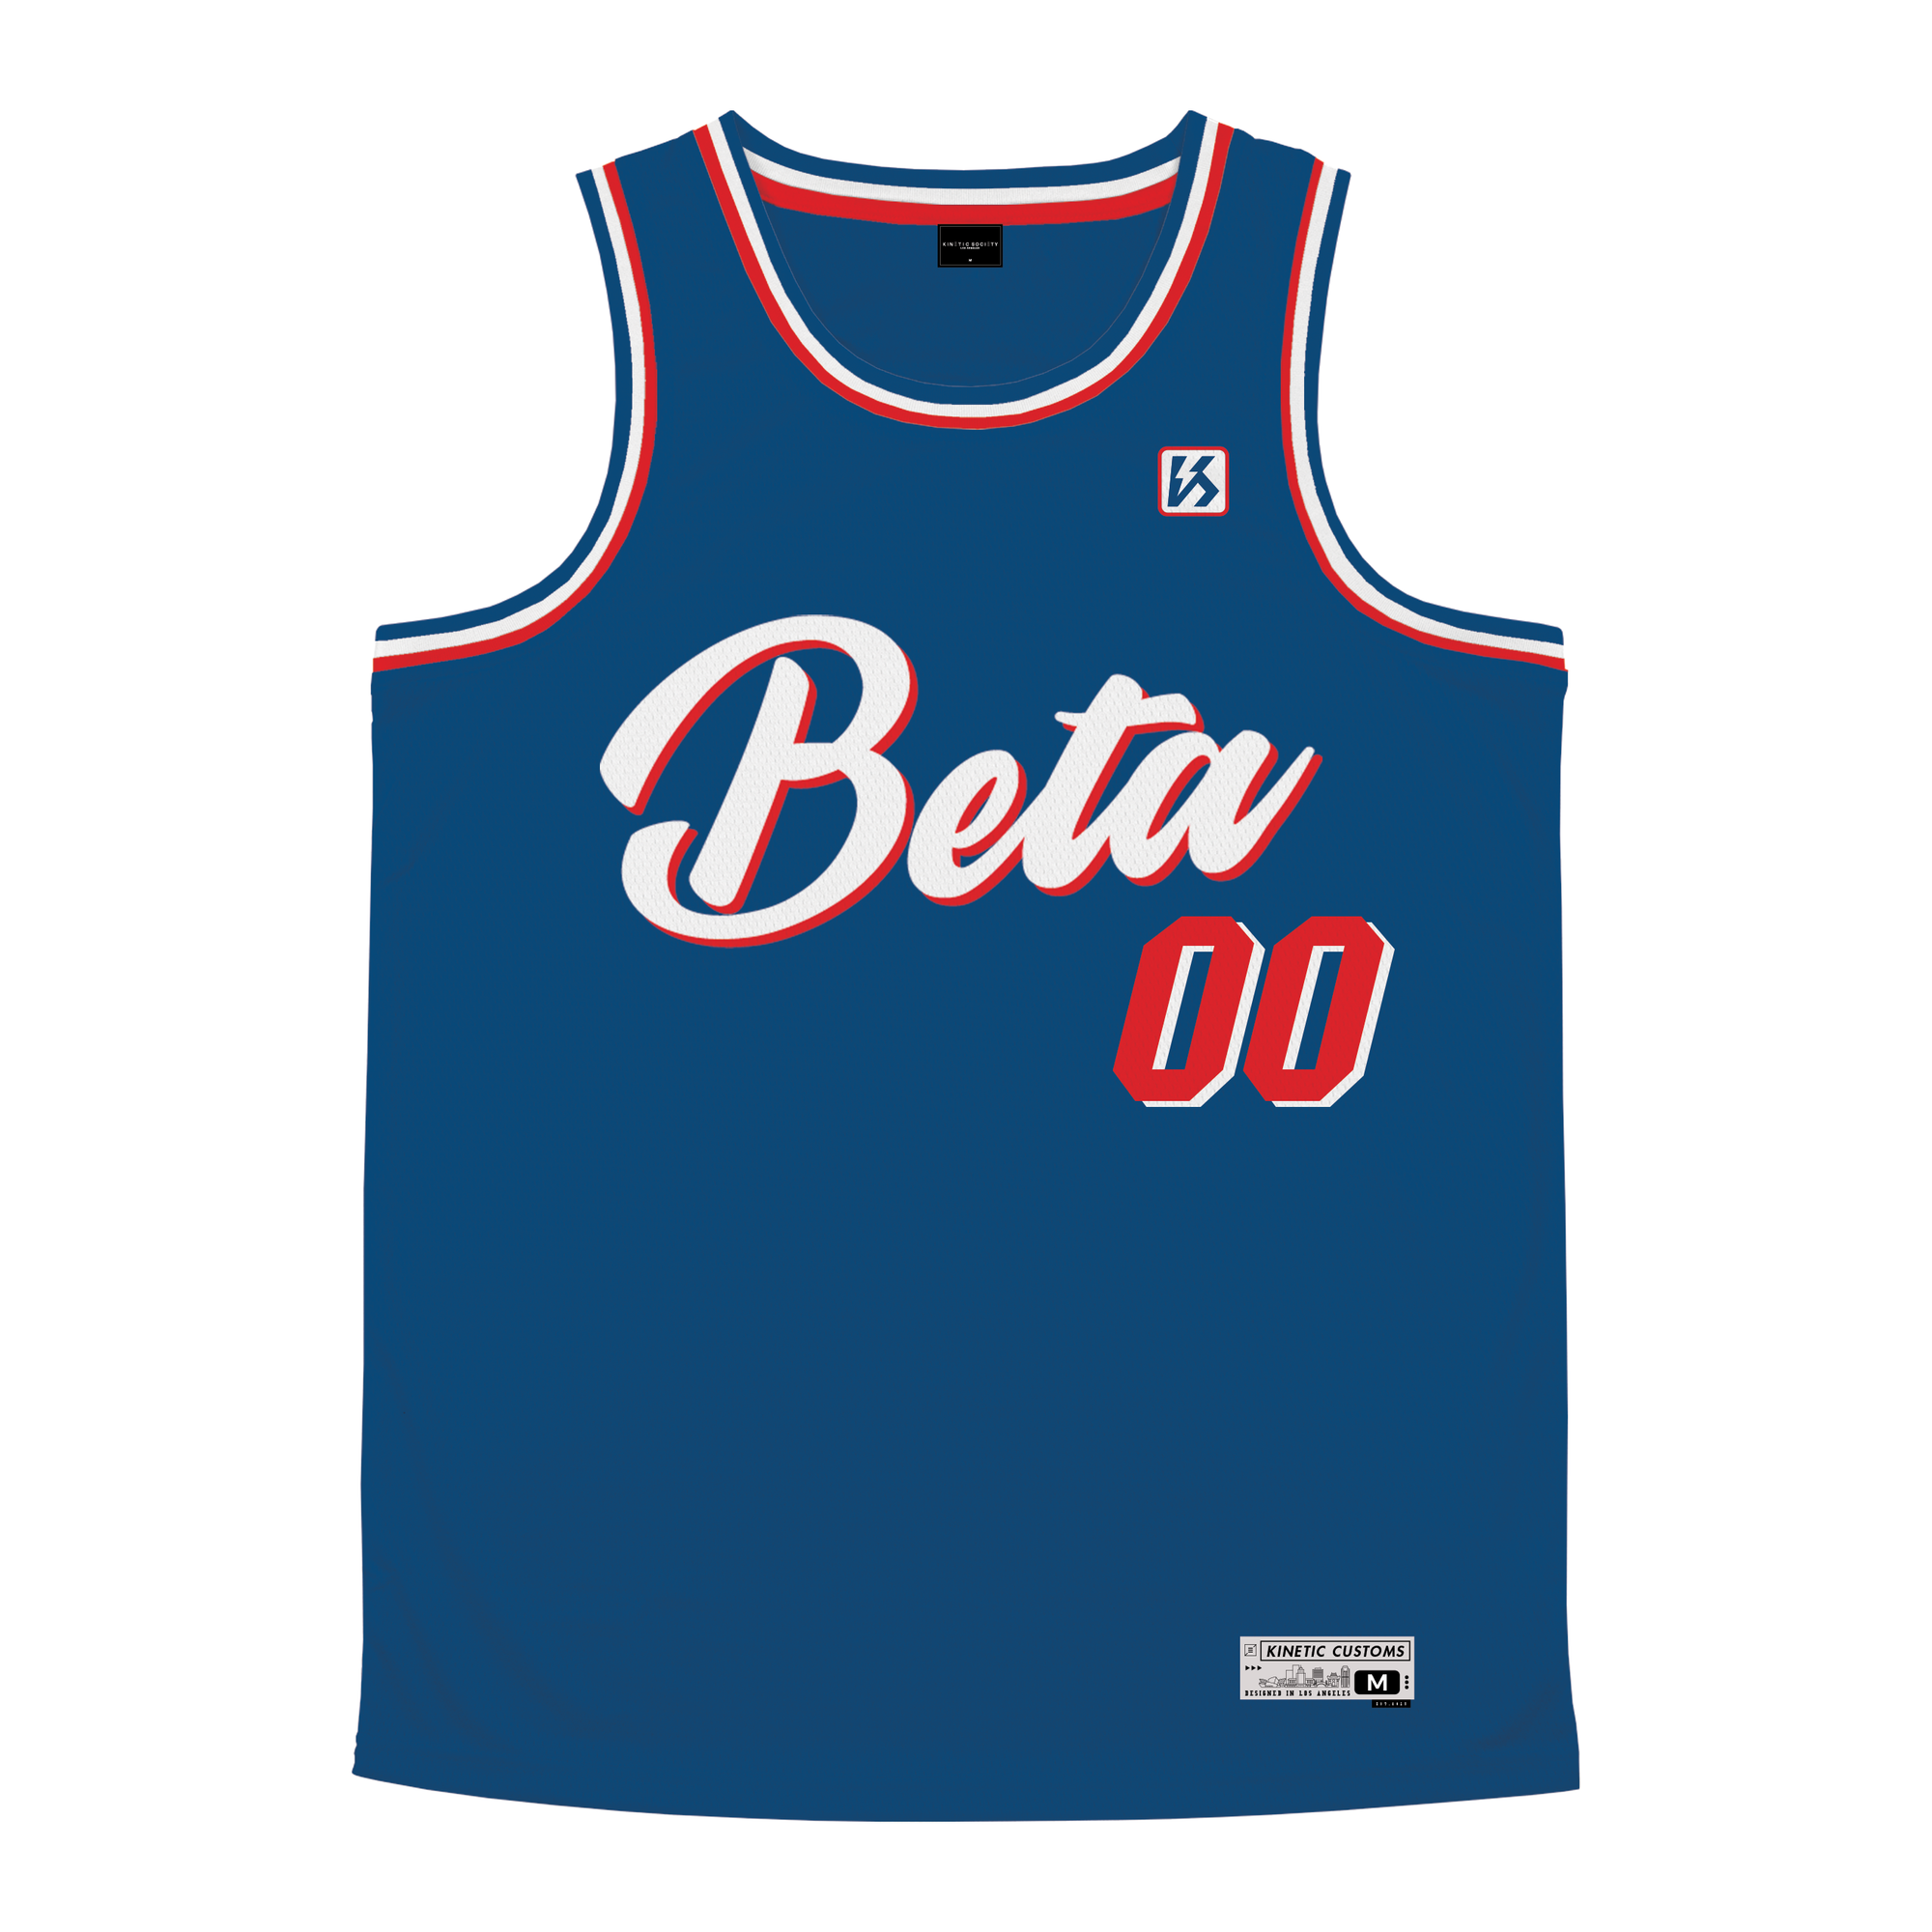 Beta Theta Pi - The Dream Basketball Jersey